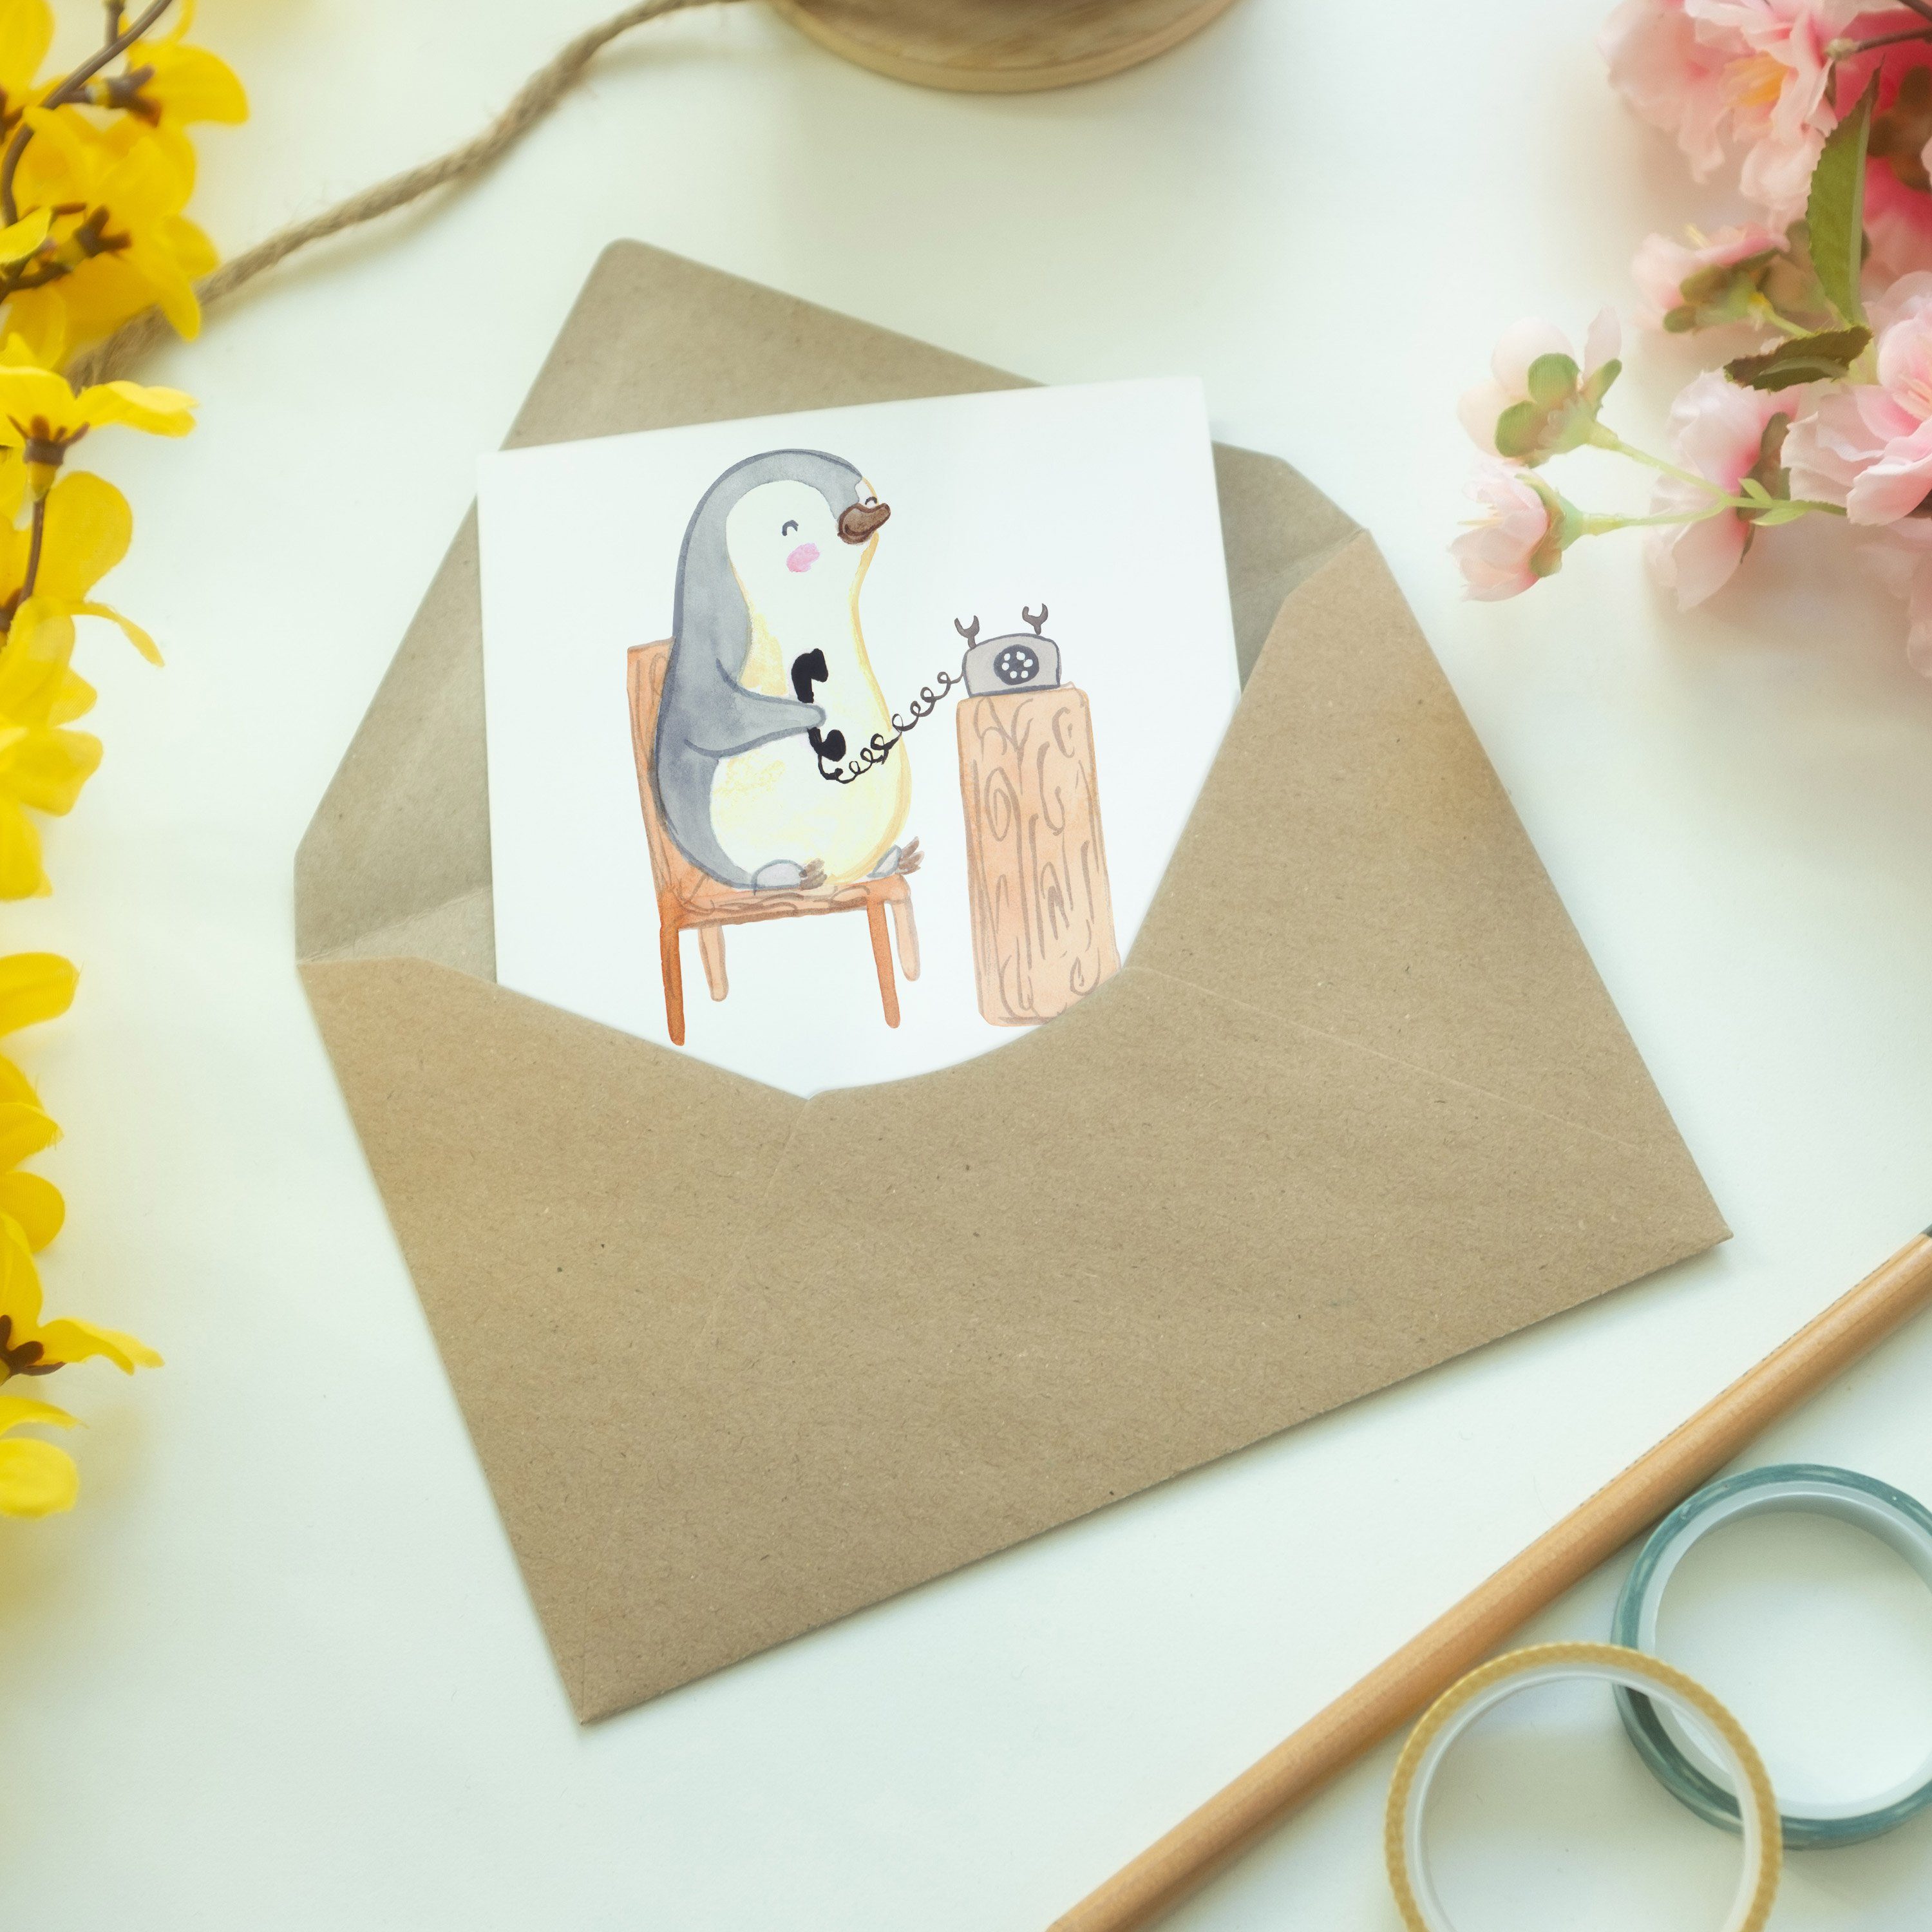 - Welt Geschenk, Pinguin Weiß Grußkarte Mr. Mrs. Glückwunschk Bester - Panda der & Lästerpartner